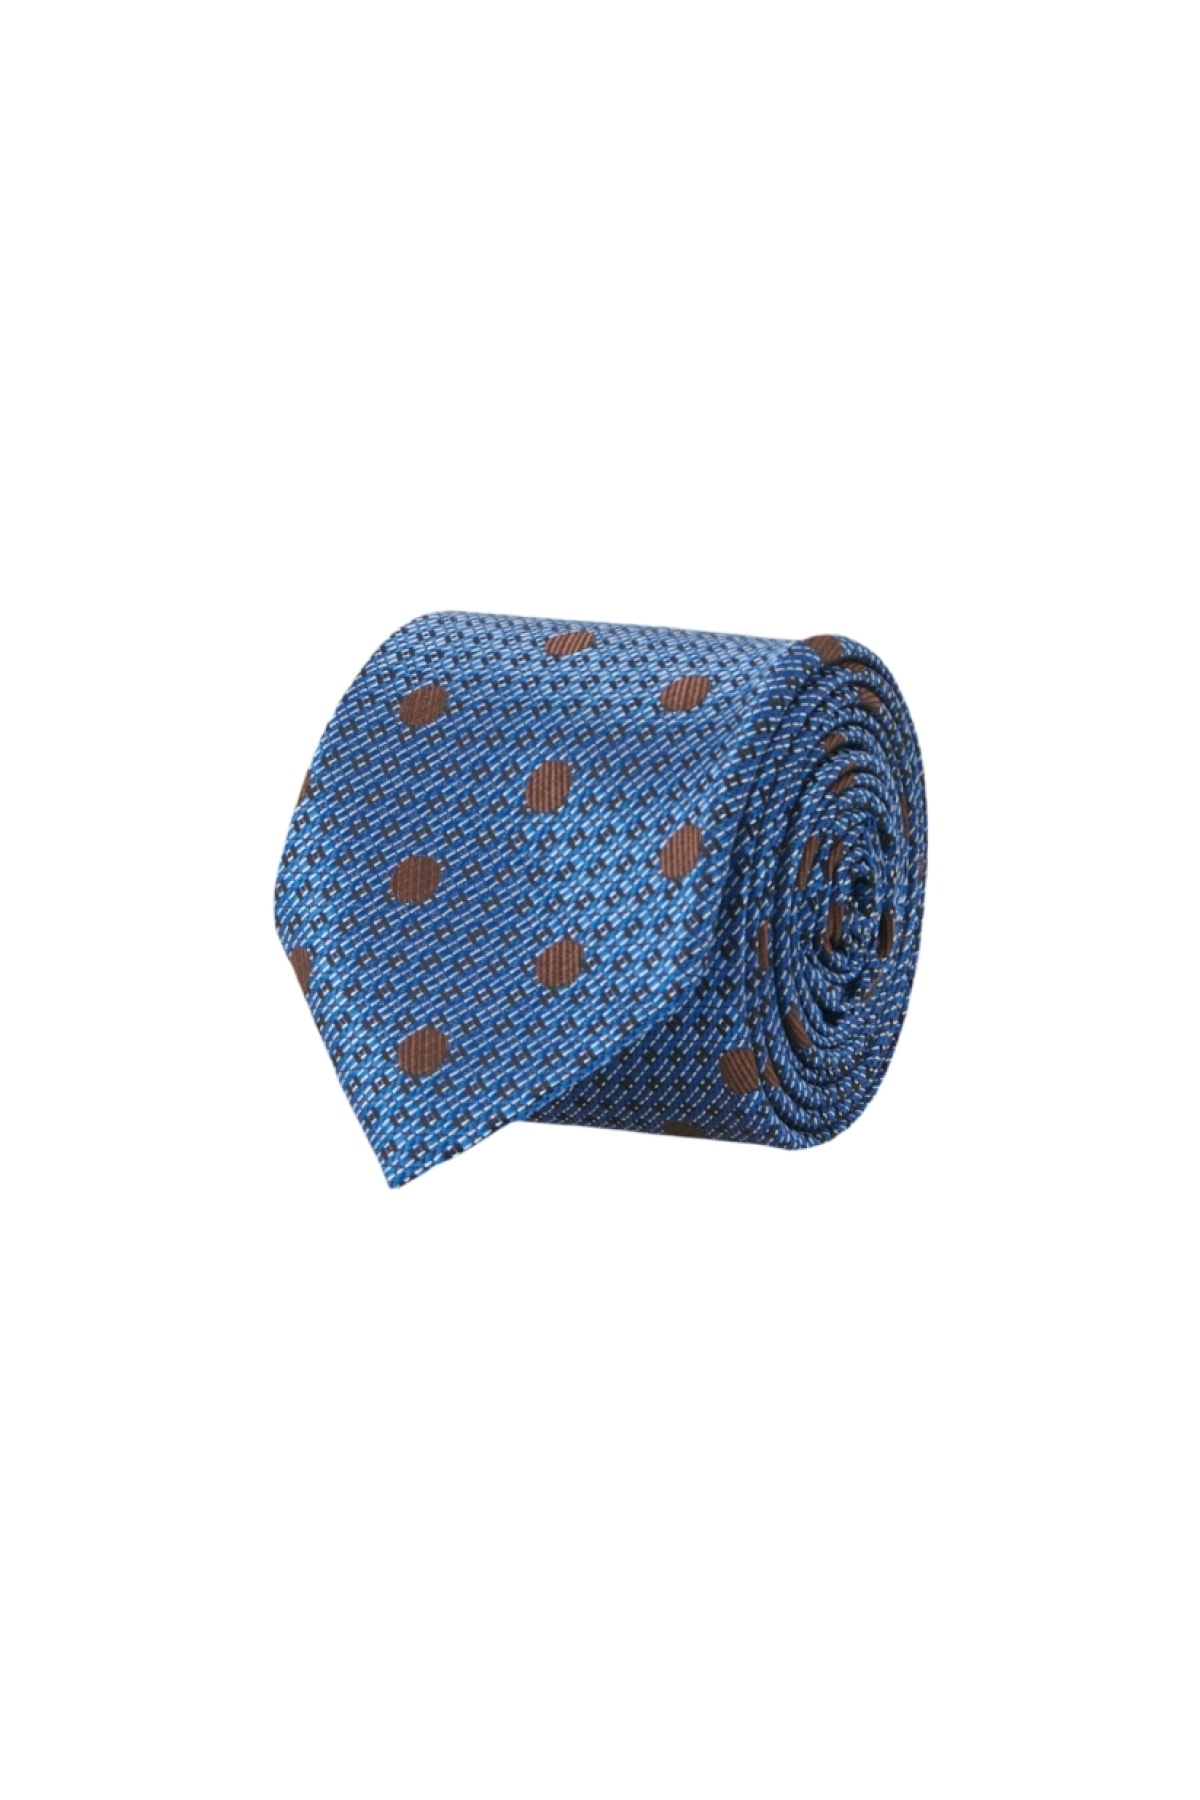 ALTINYILDIZ CLASSICS Men's Blue-brown Patterned Classic Tie